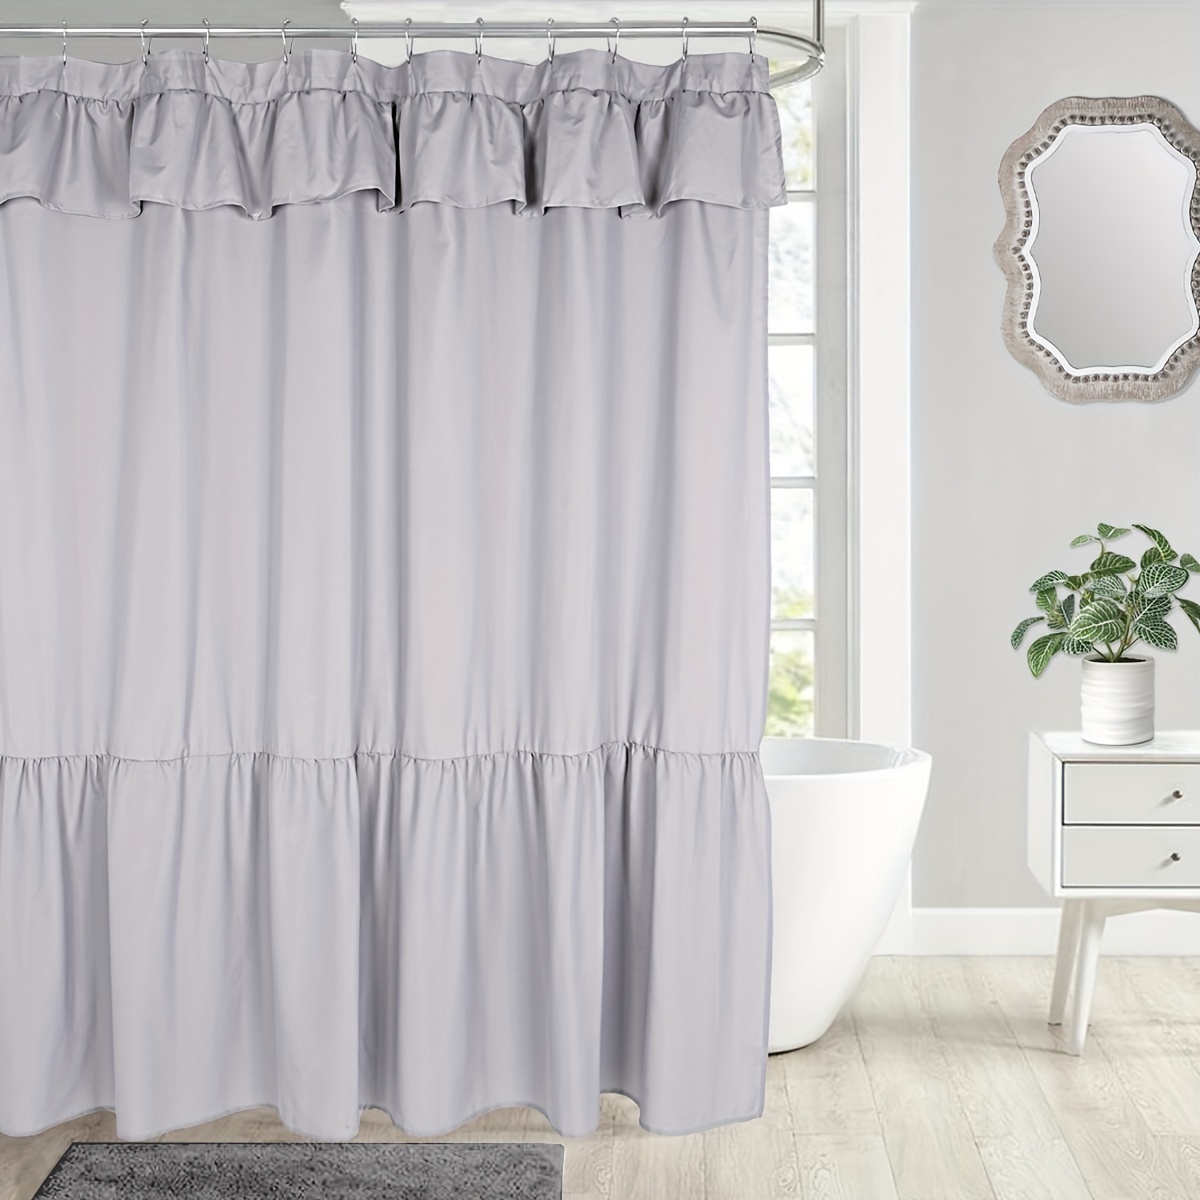 Forro para cortina ducha baño 8G 72 x 72 transparente resistente agua